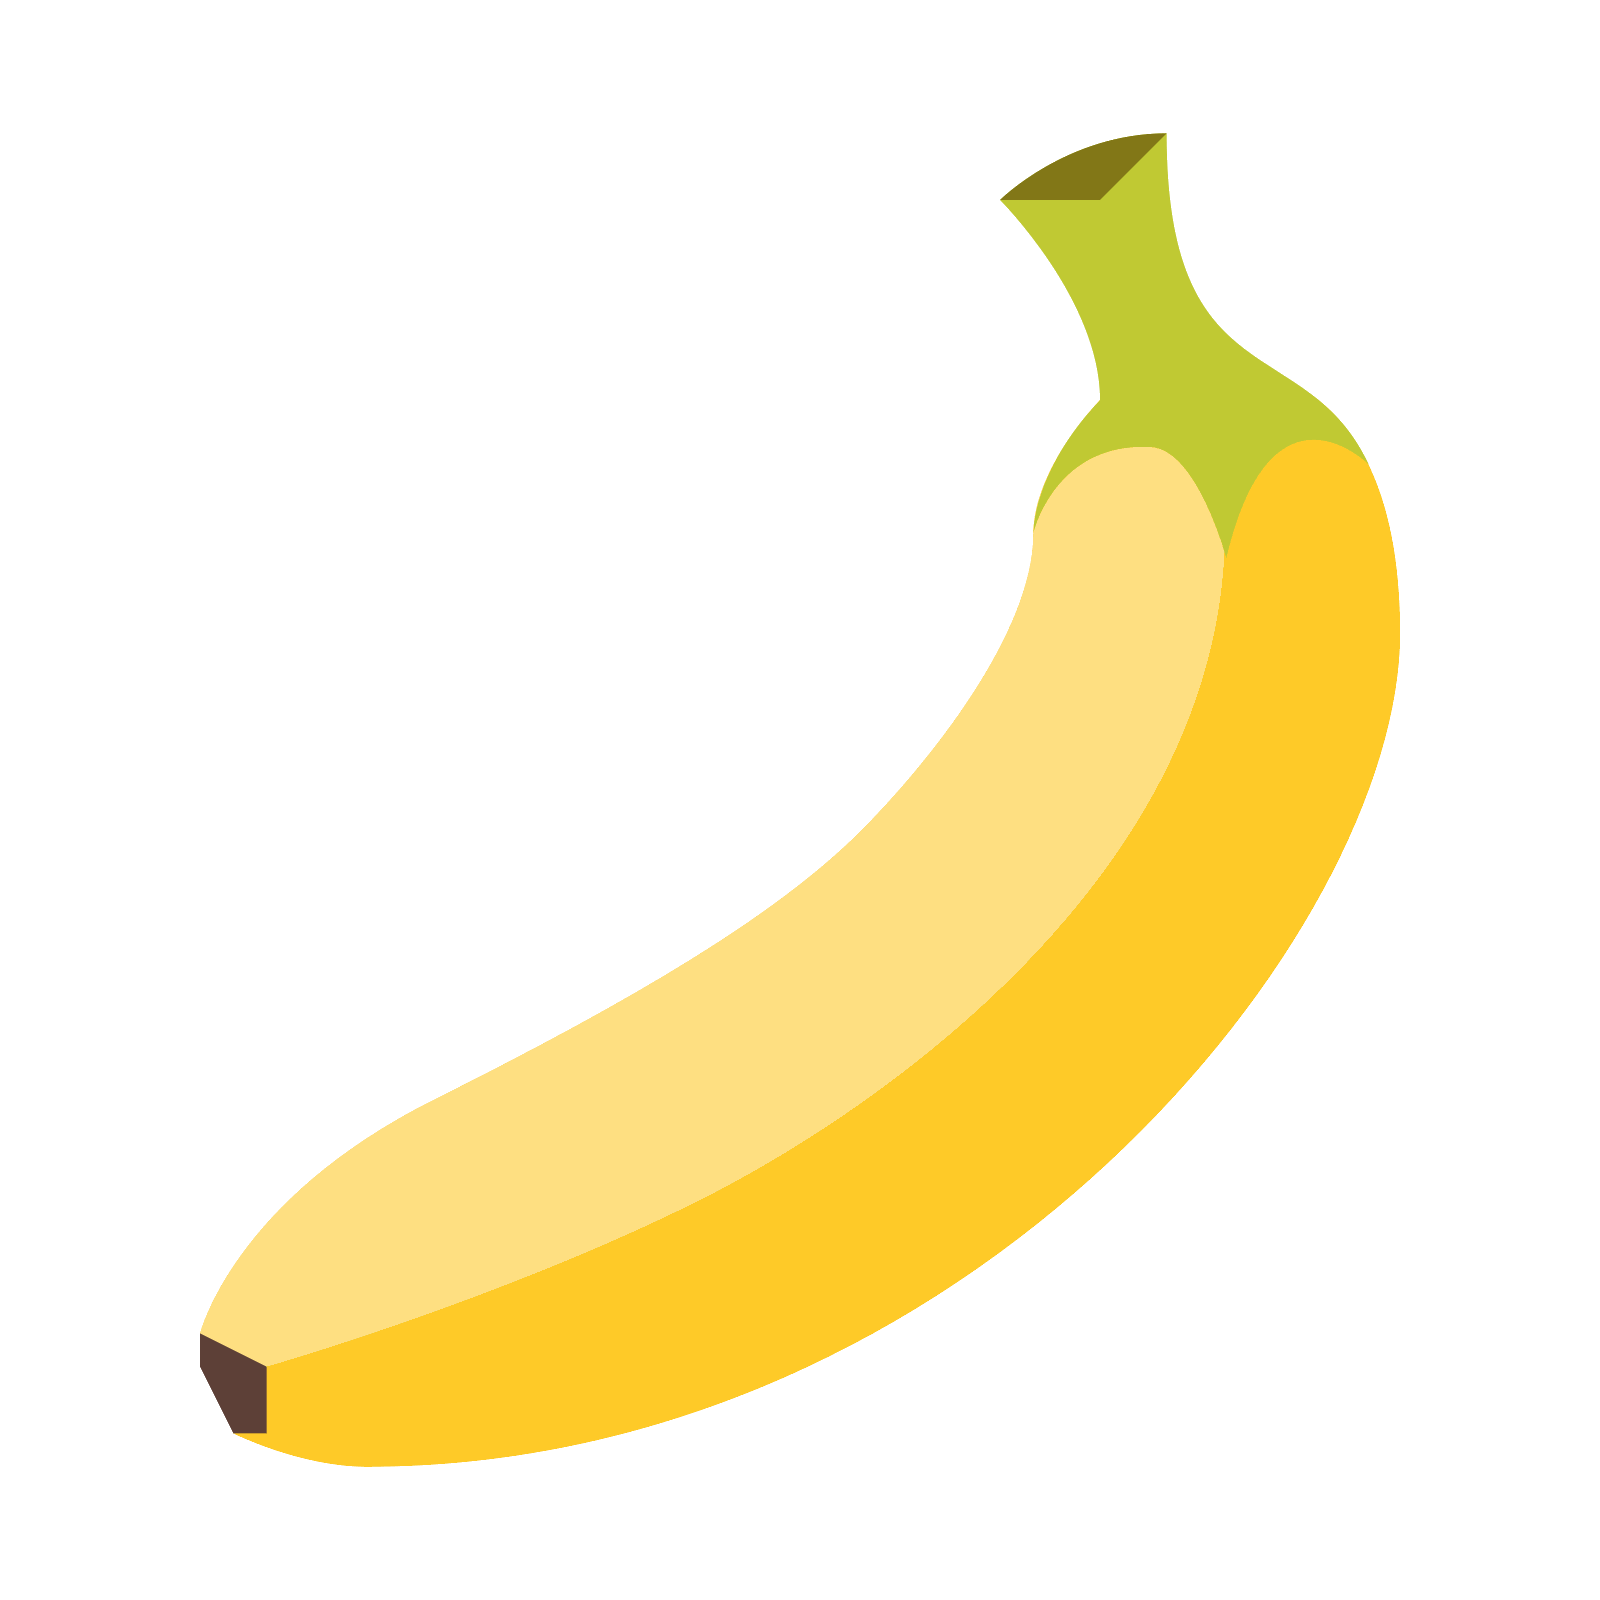 fruits clipart banana